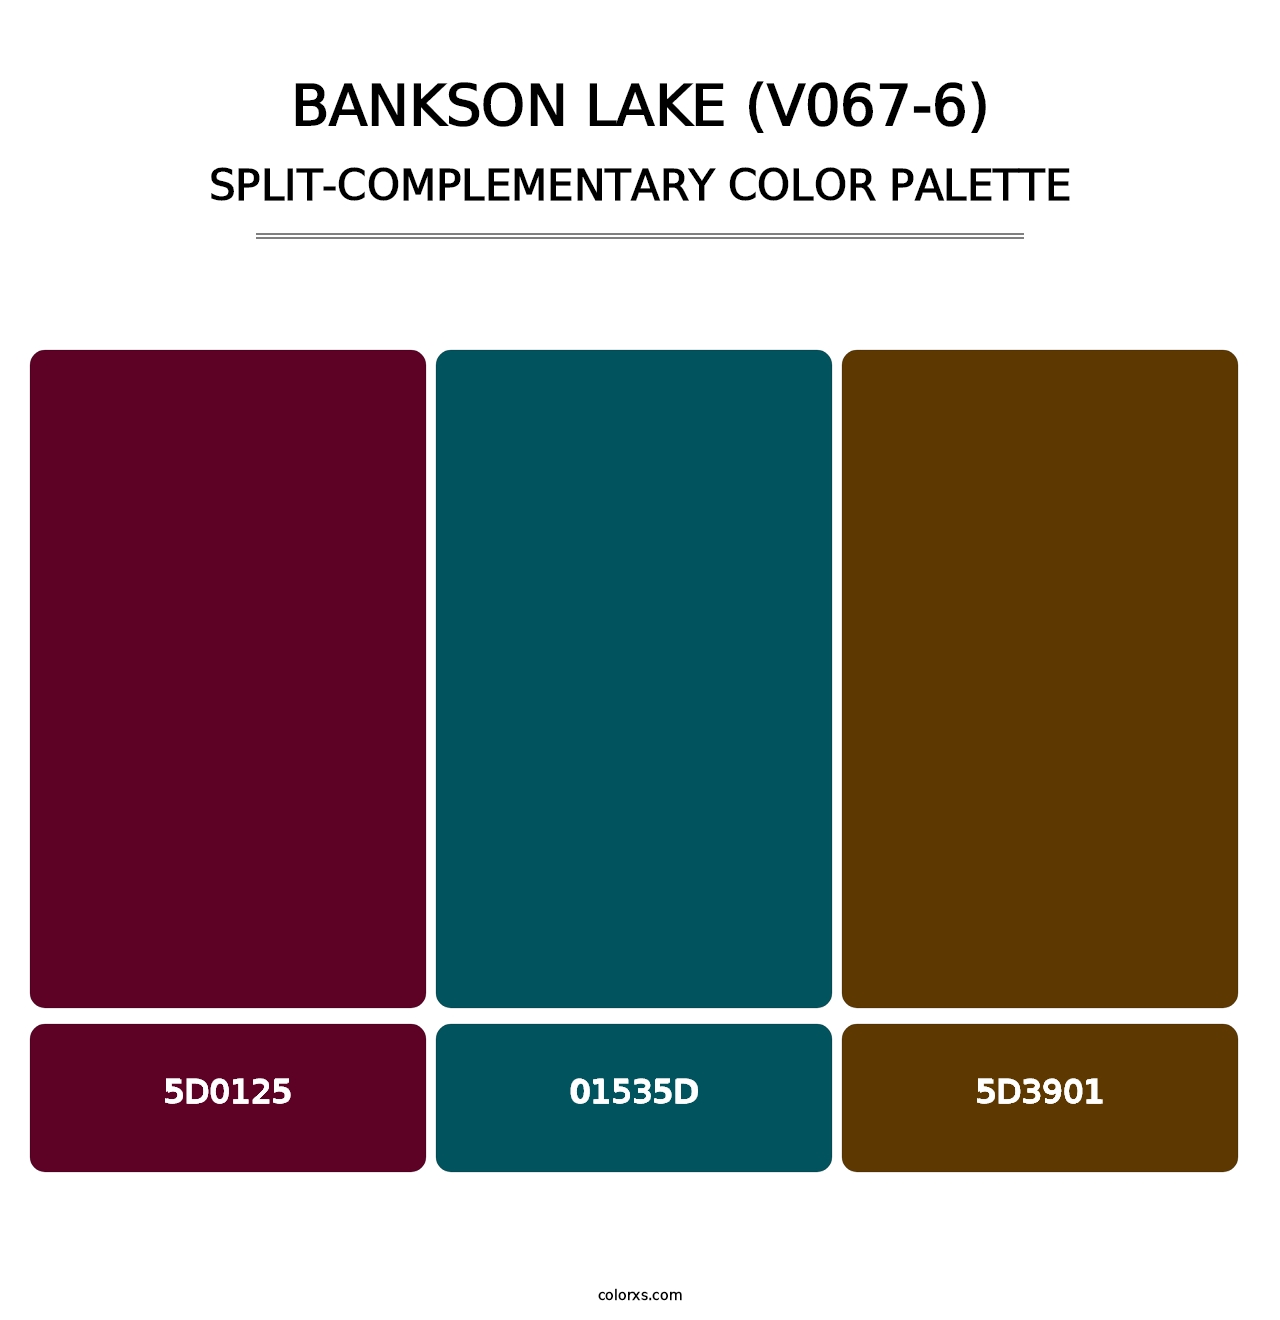 Bankson Lake (V067-6) - Split-Complementary Color Palette